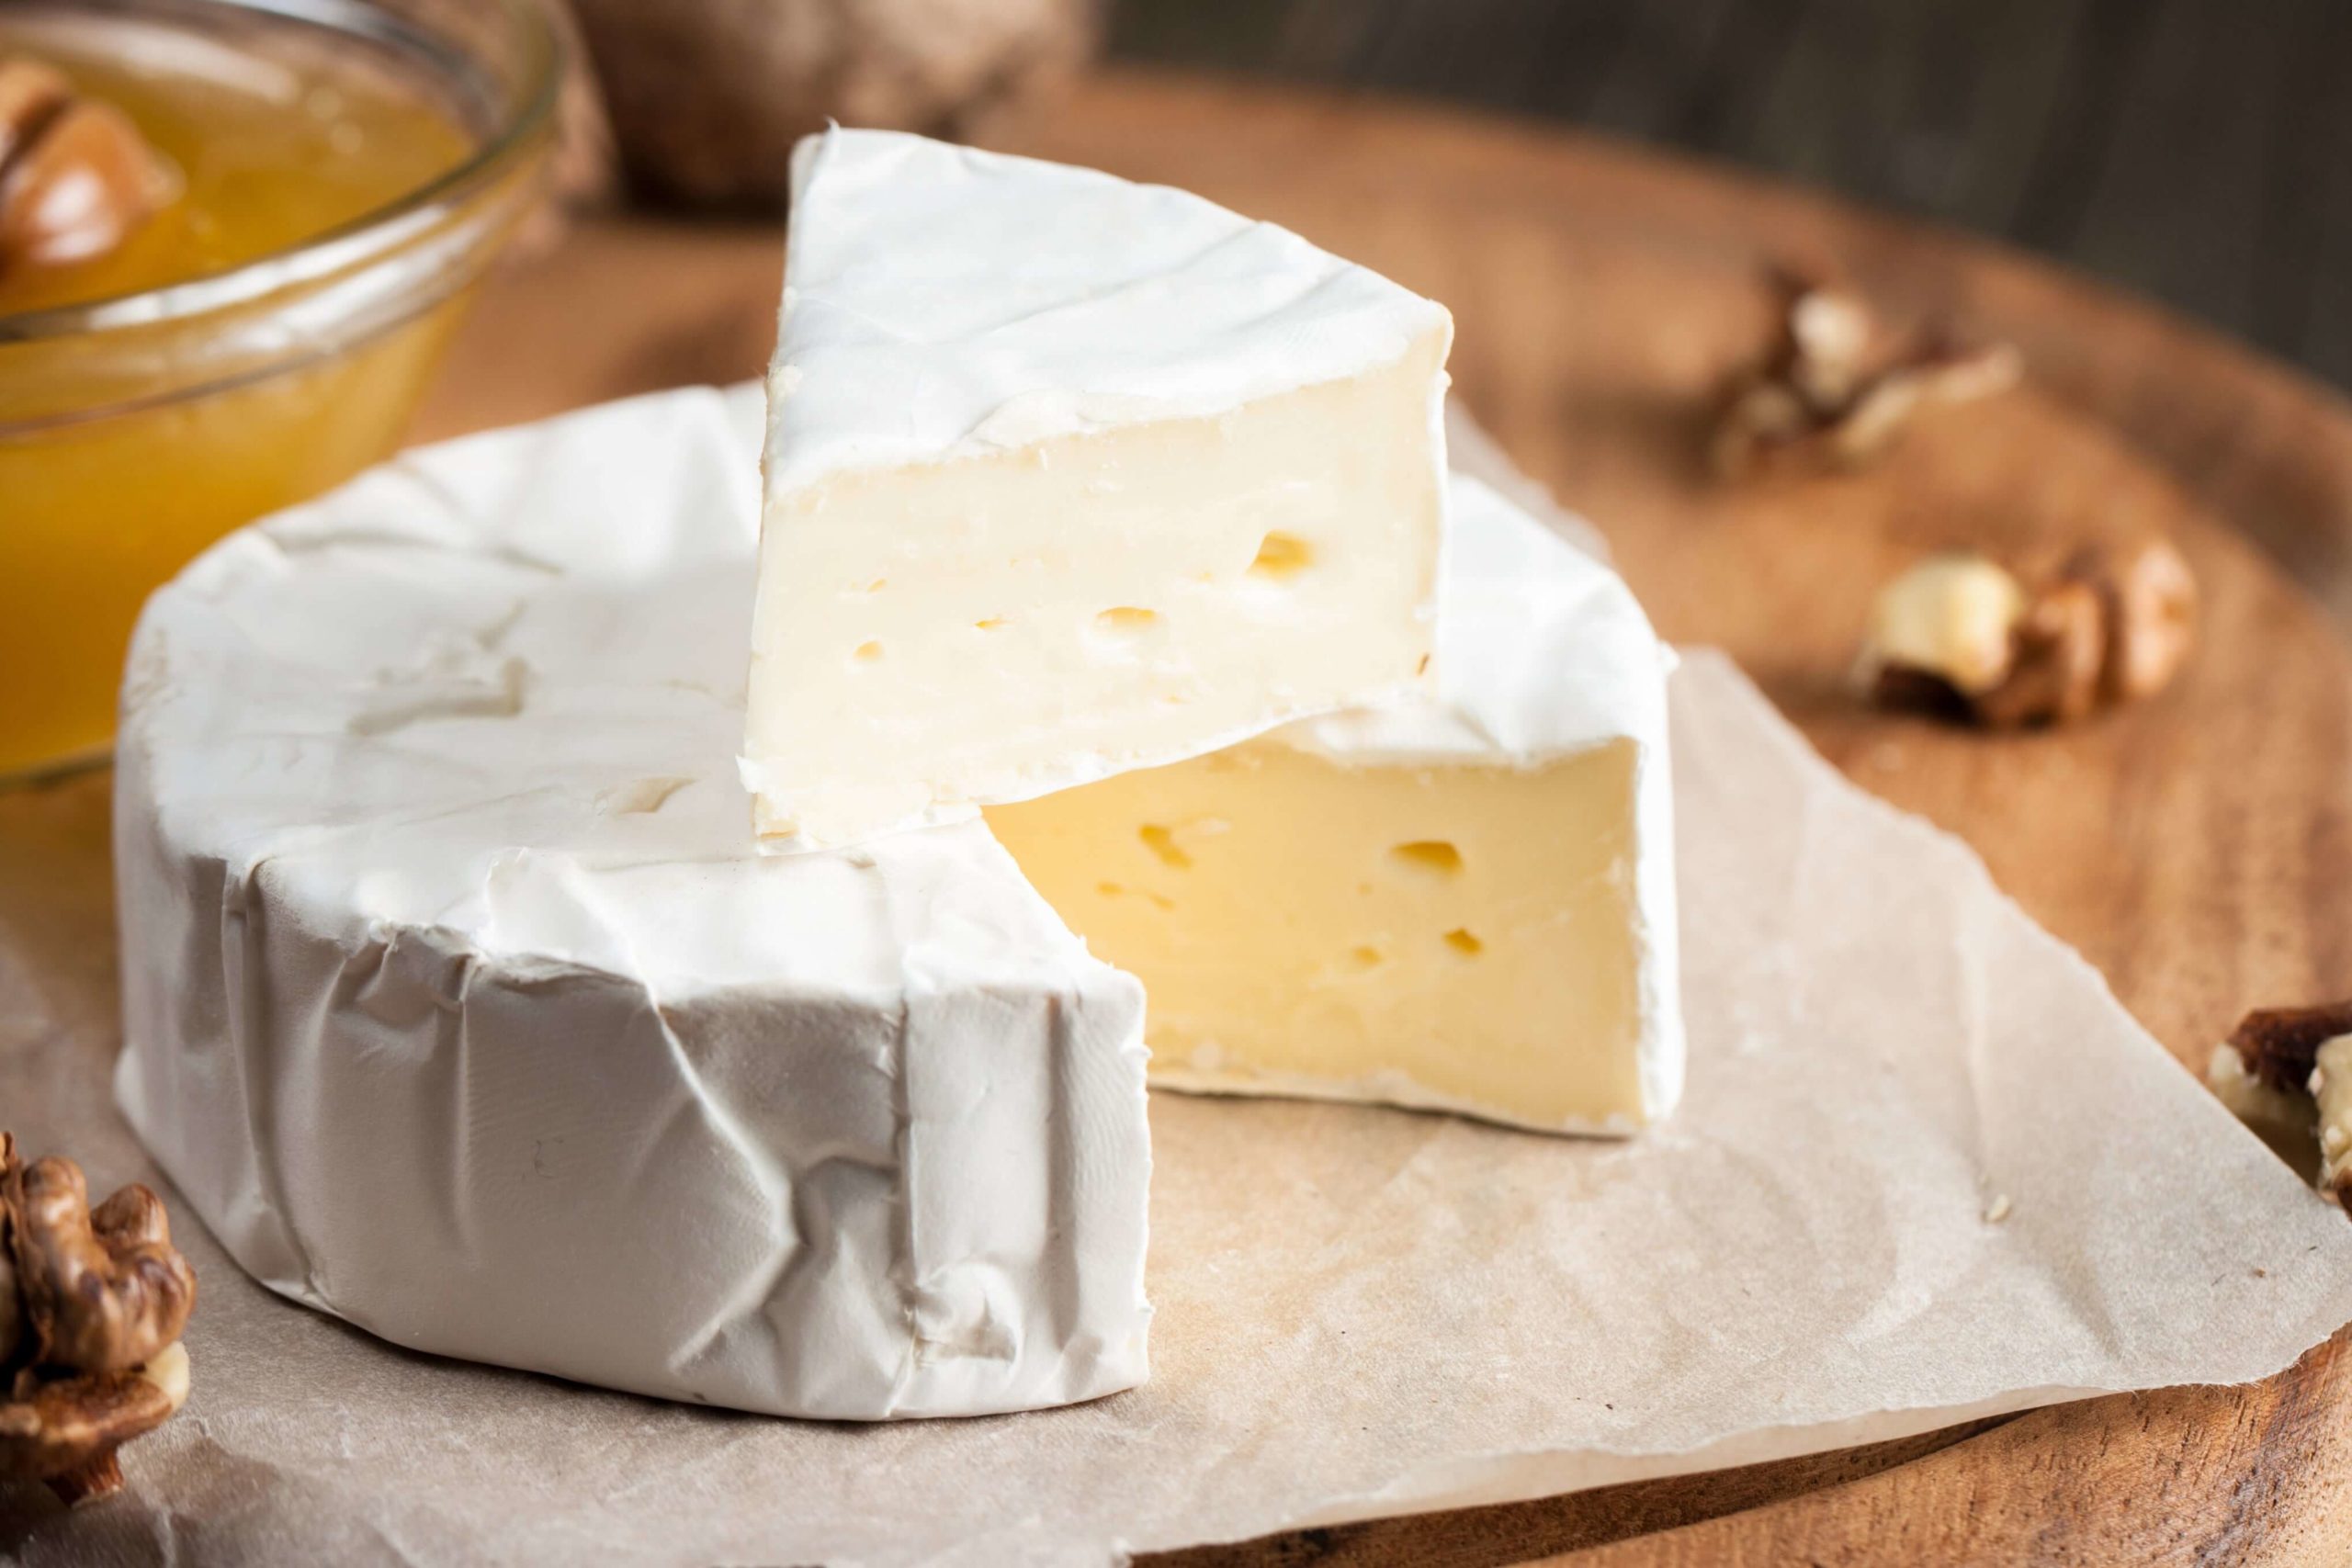 Soft-ripened cheese